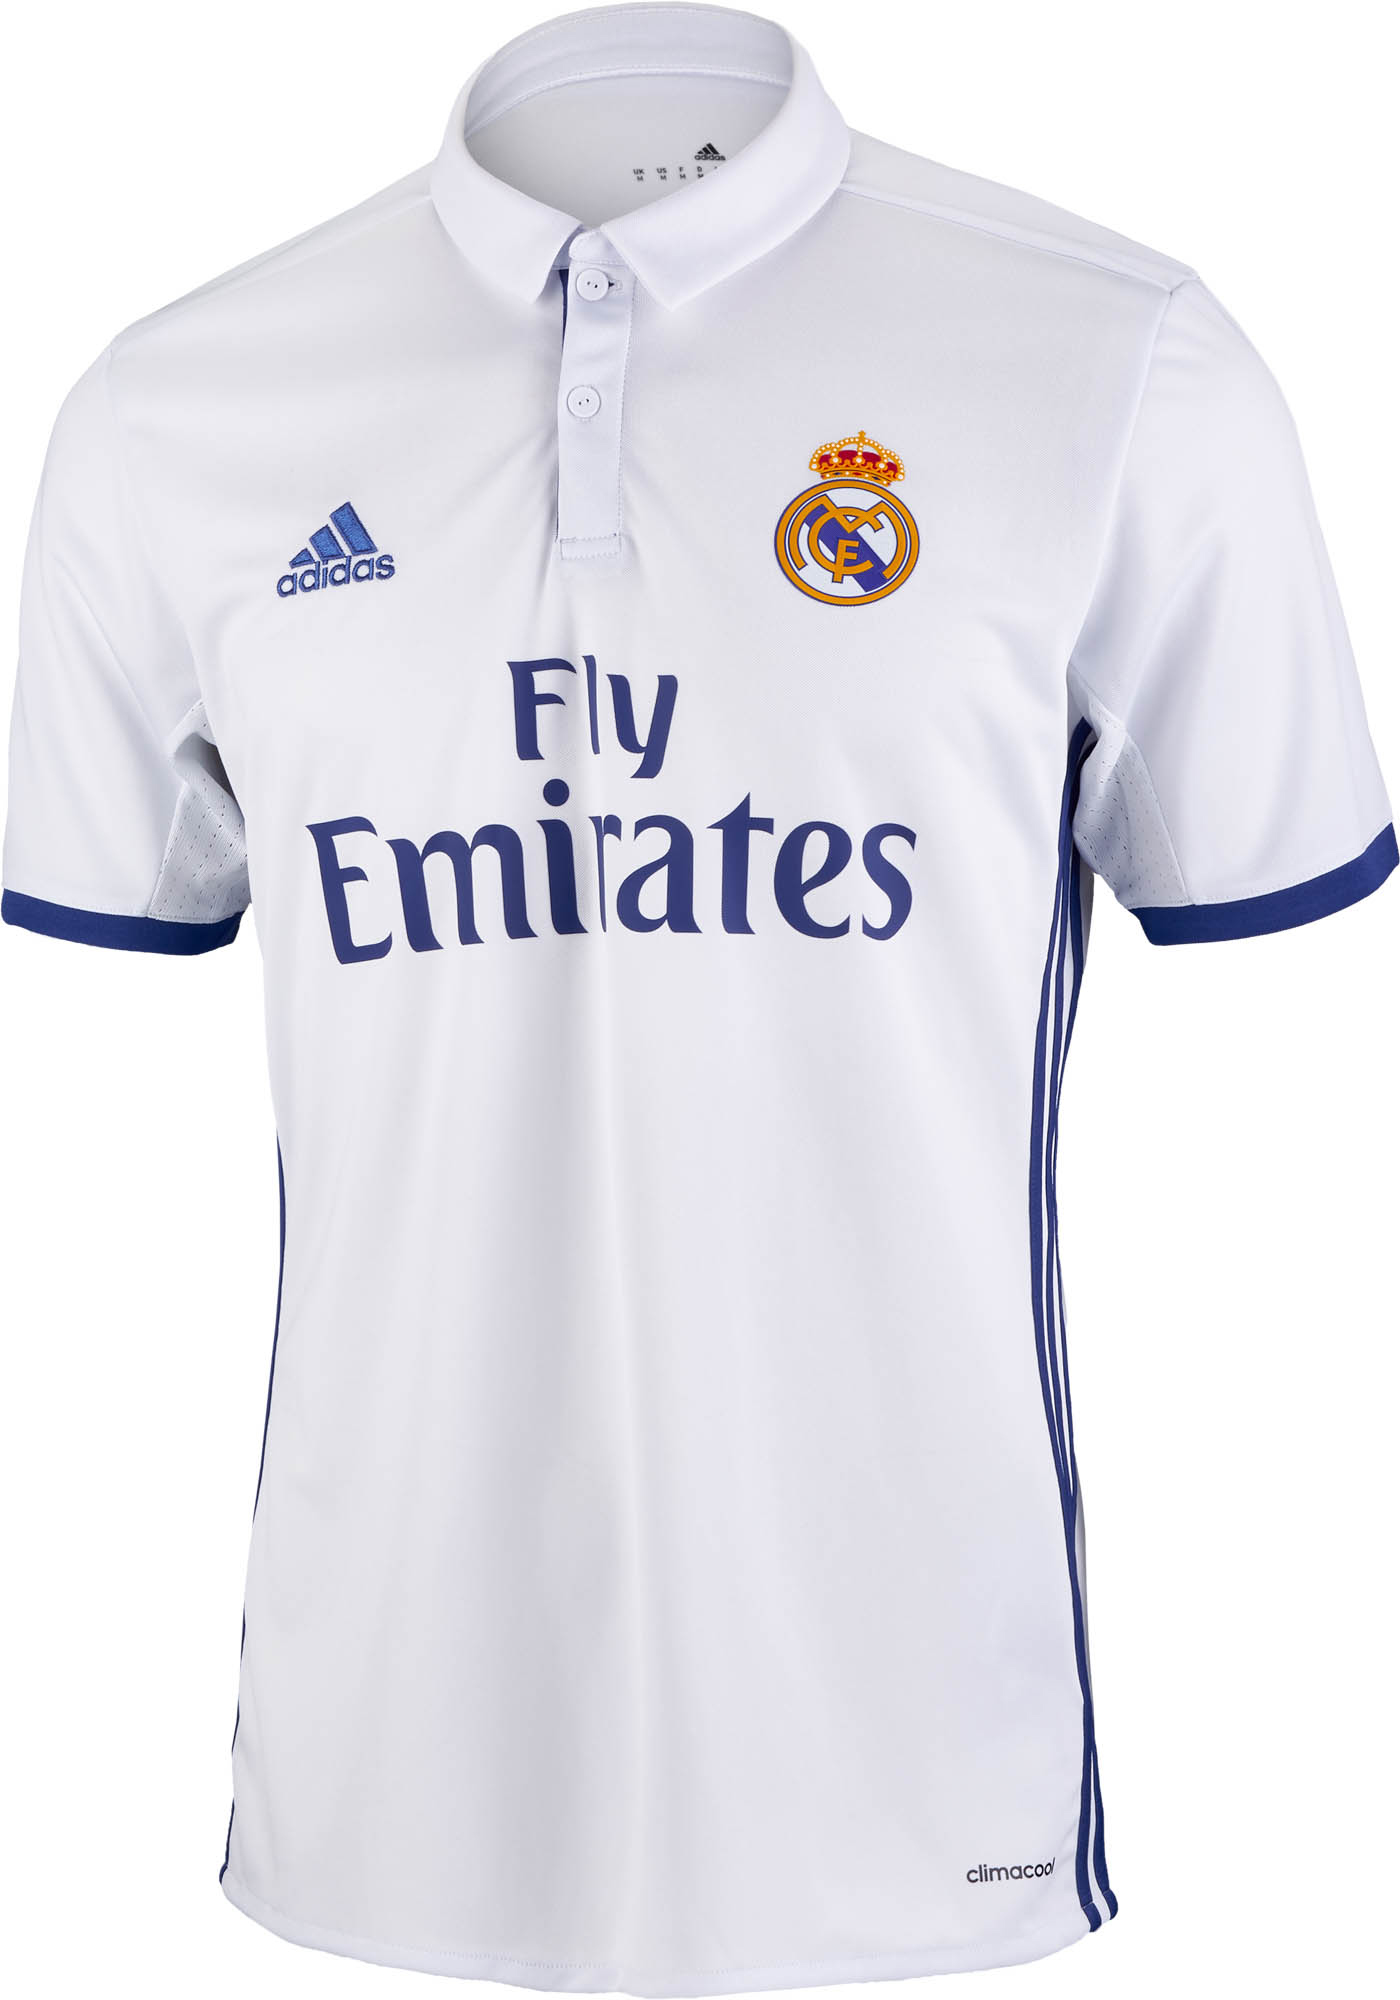 adidas Real Madrid Jersey 2016/17 Real Madrid Home Jerseys